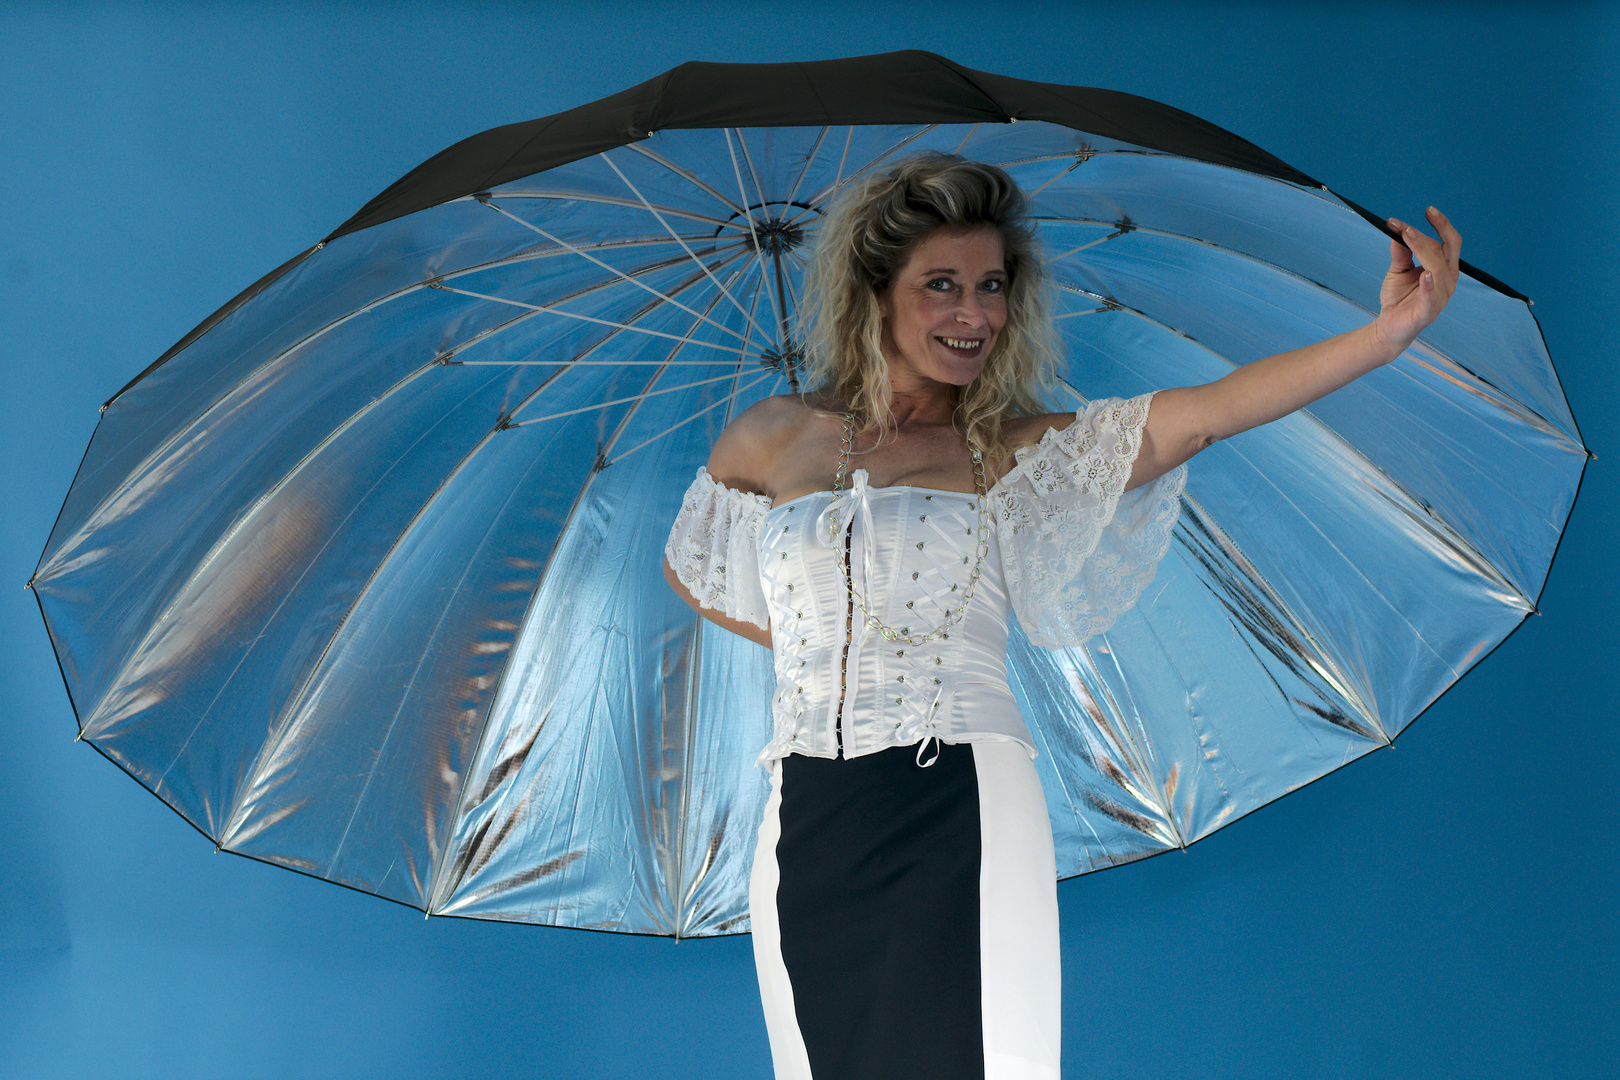 Tanja Under The Umbrella II